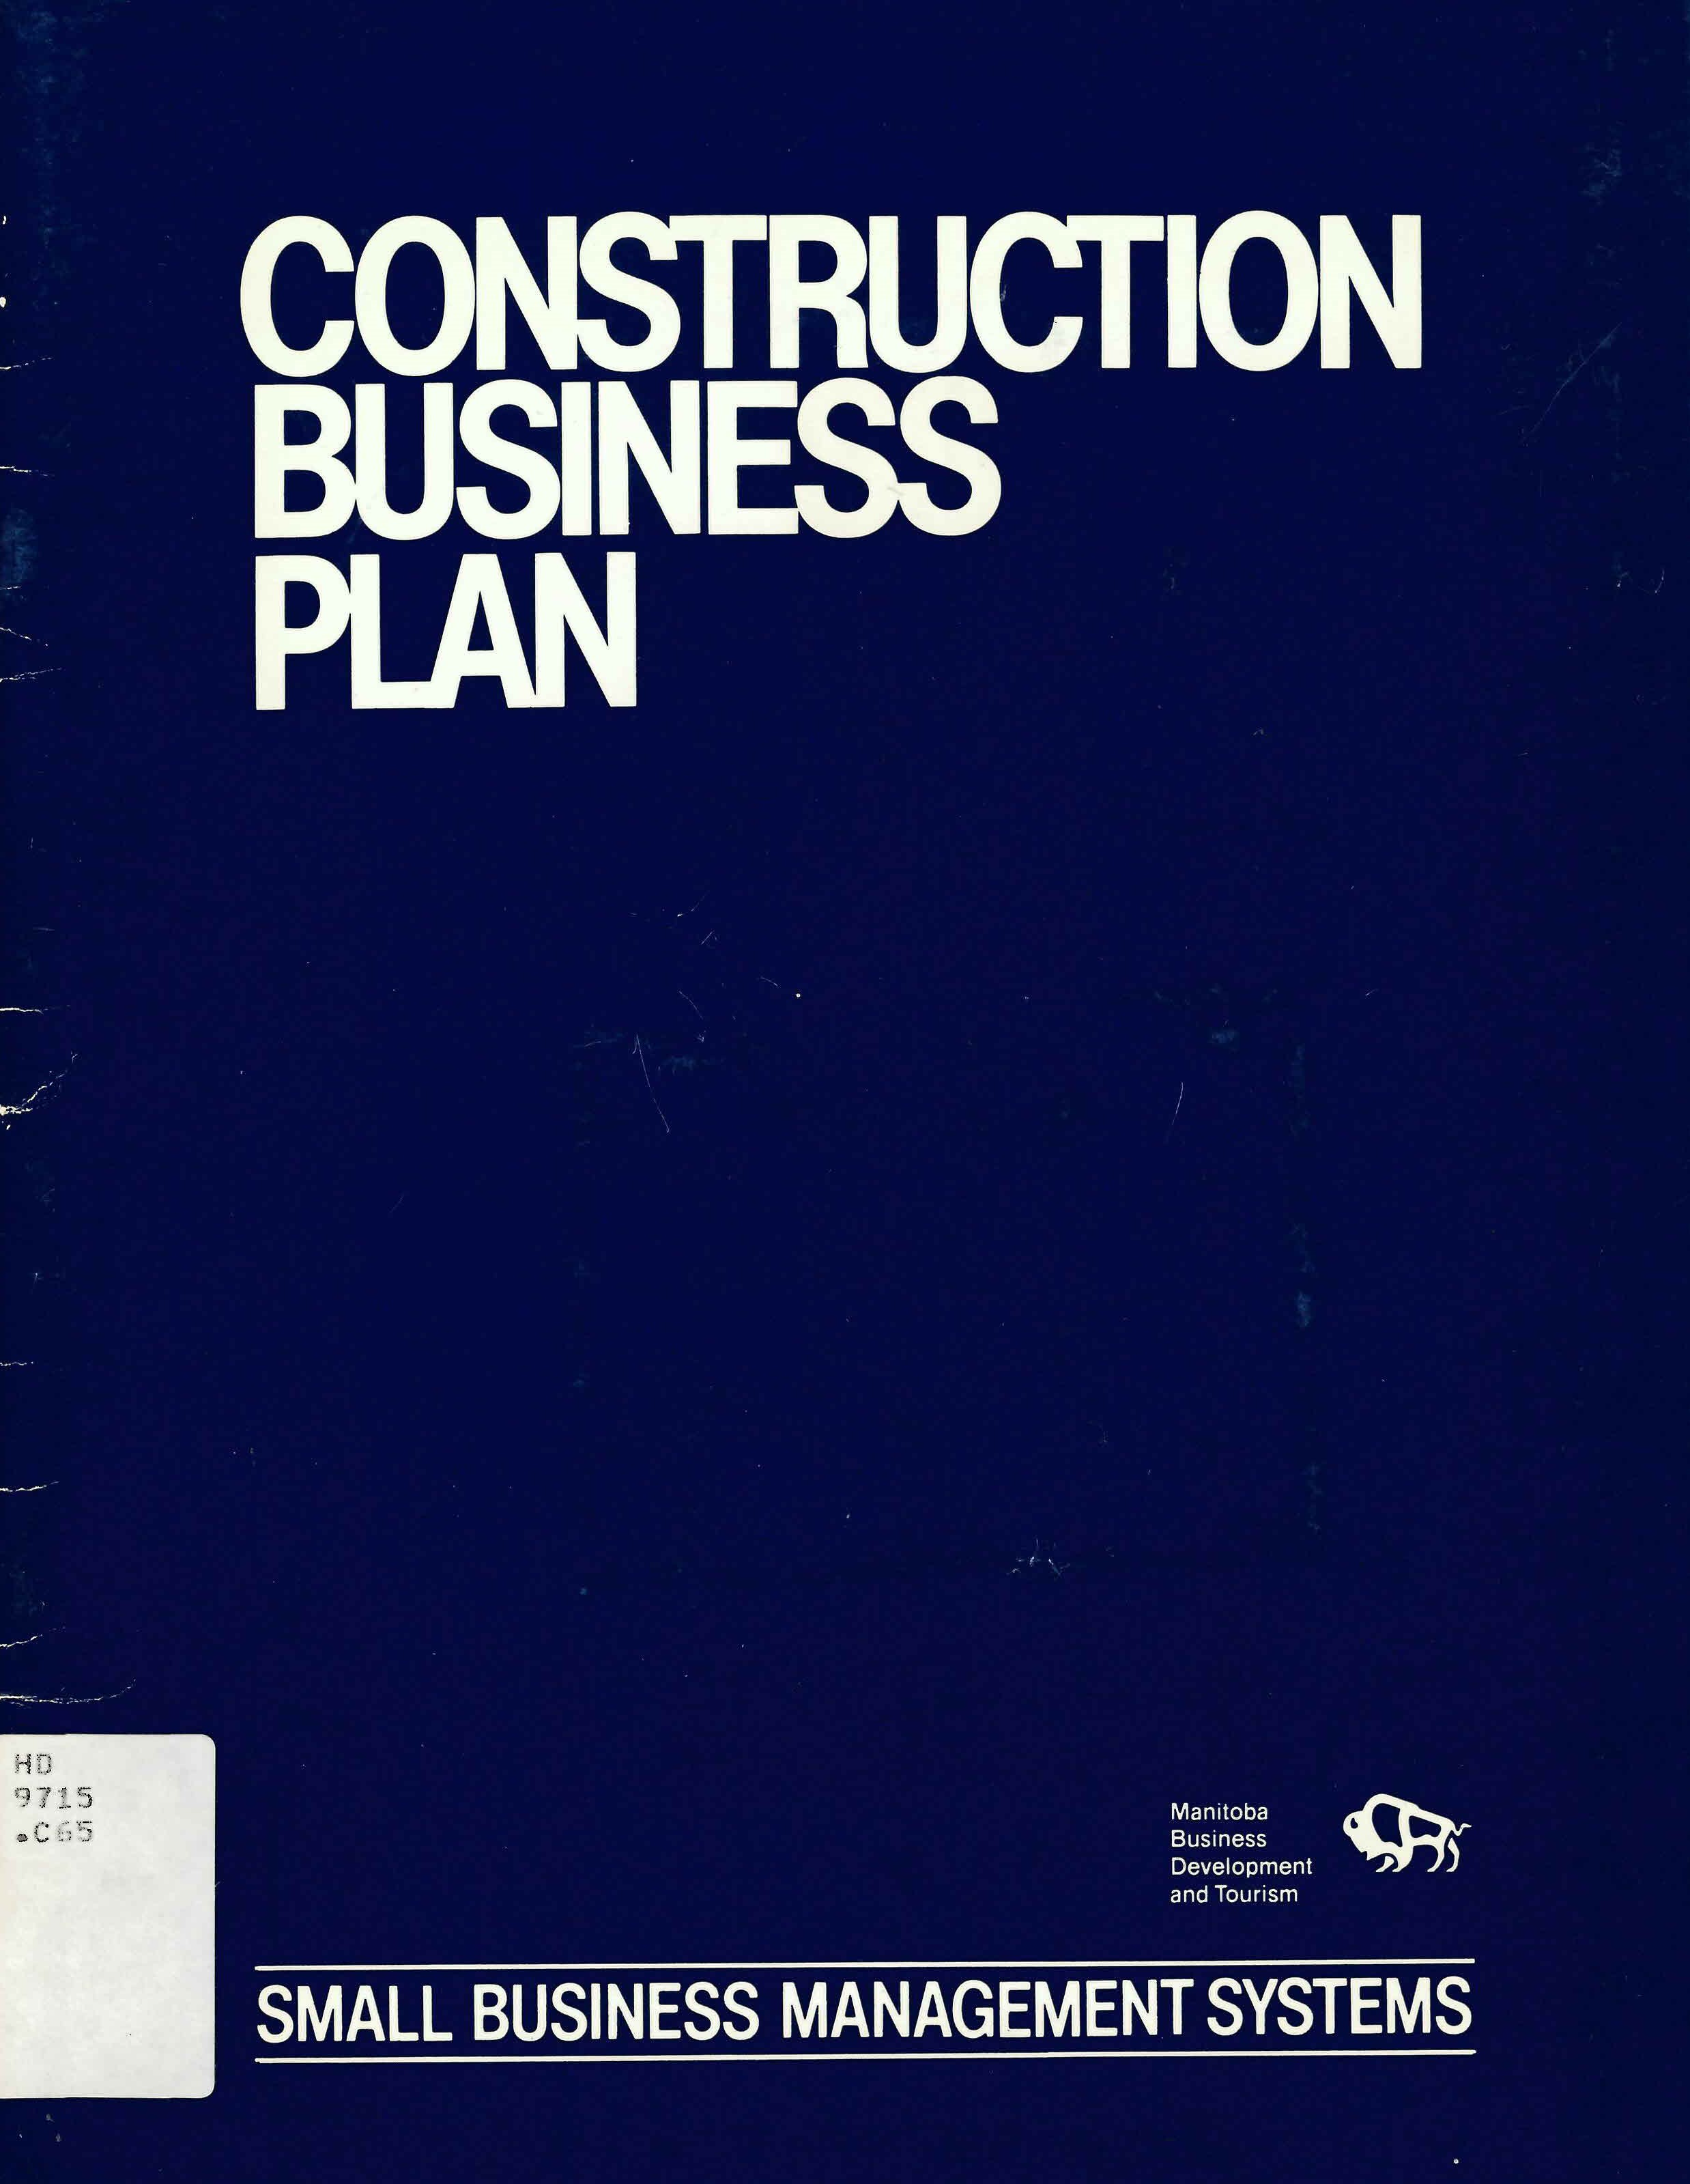 Construction business plan